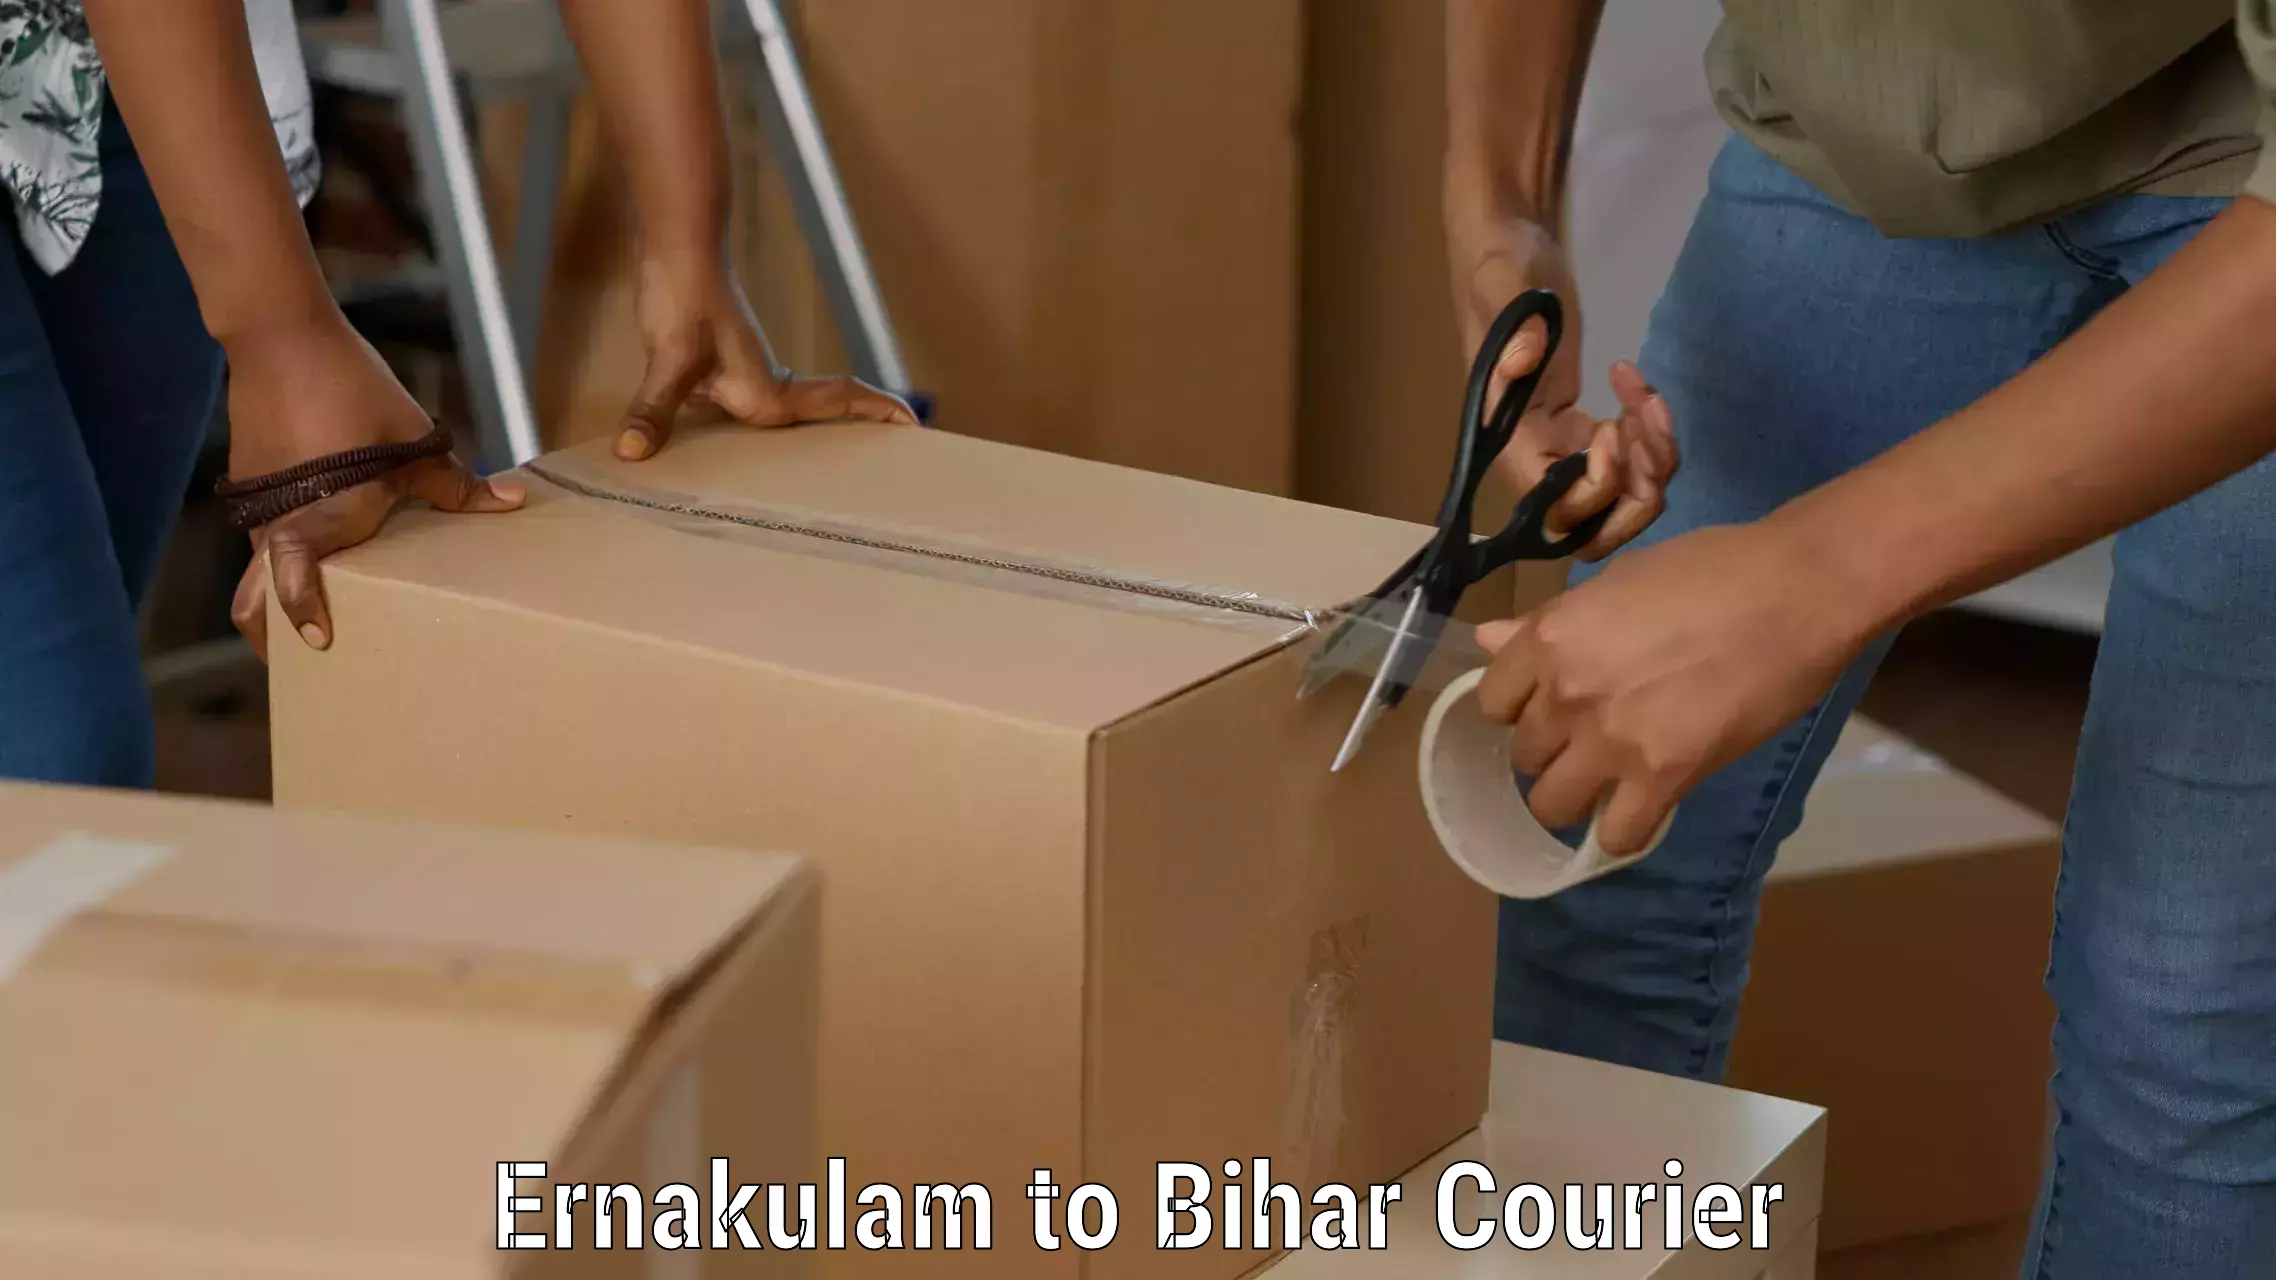 Express delivery capabilities Ernakulam to Bhorey